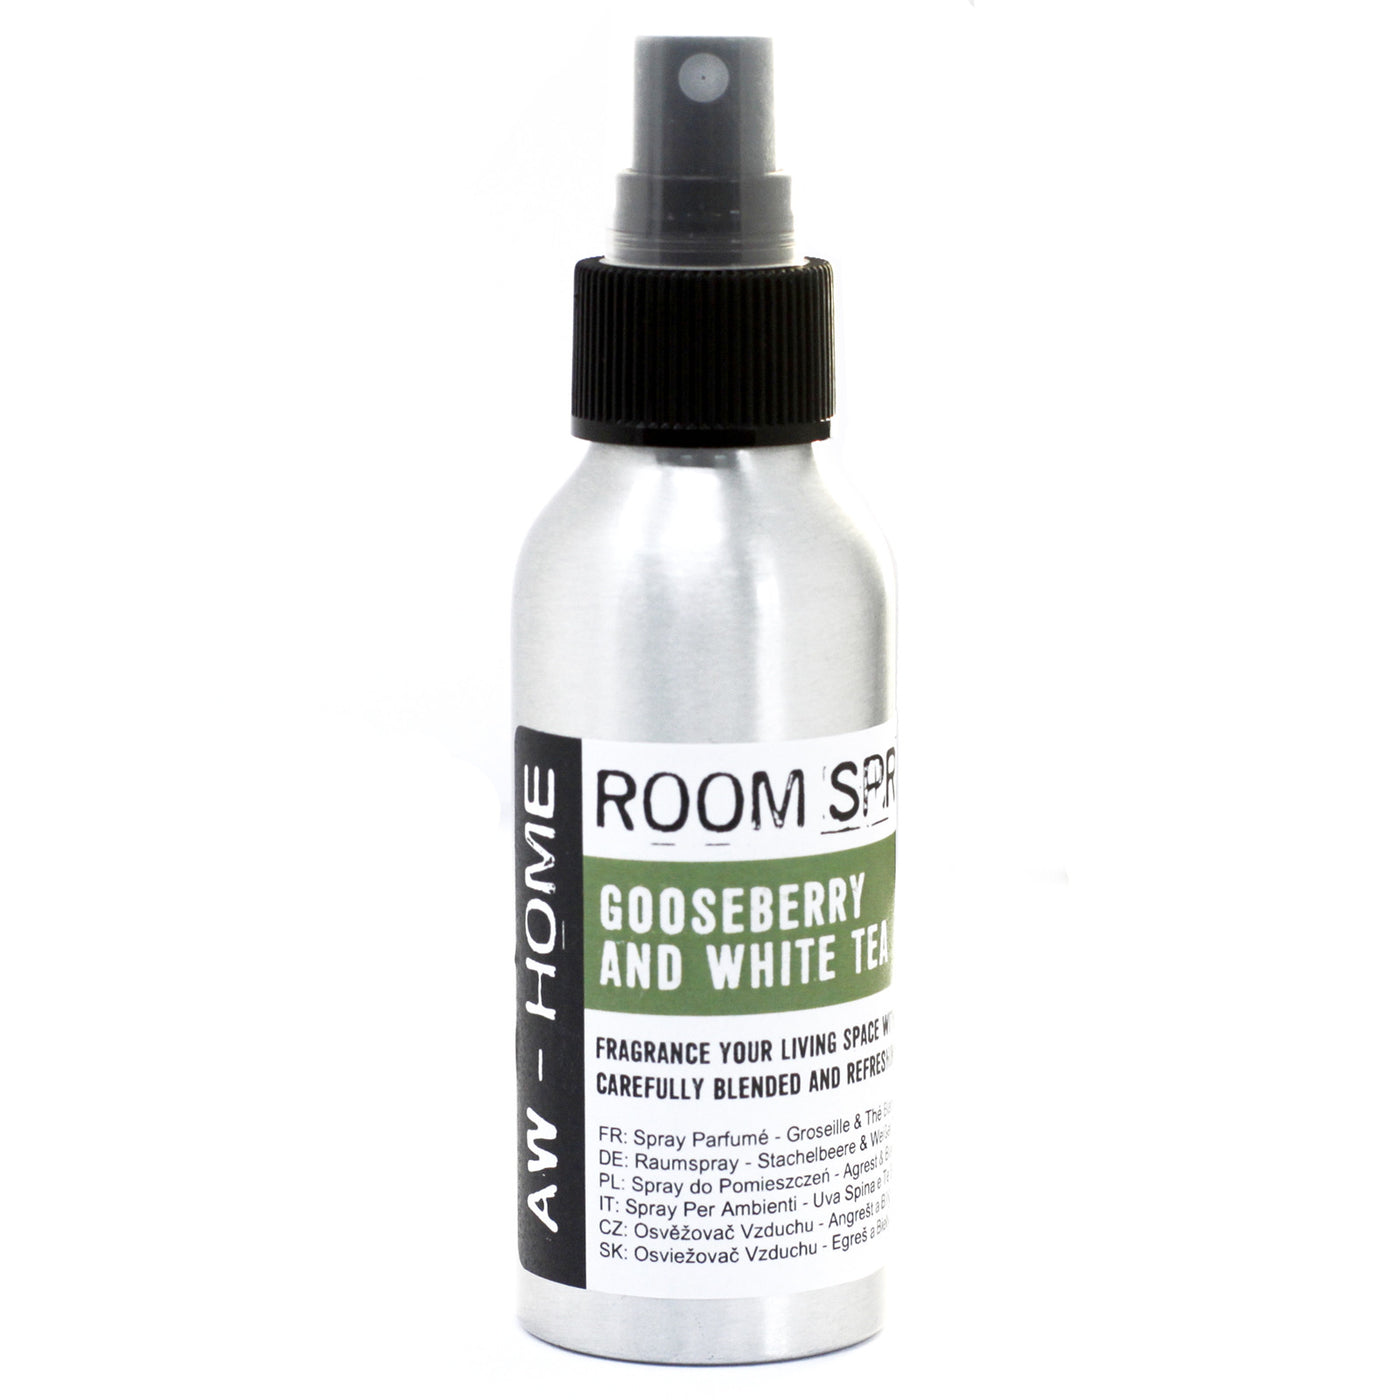 Gooseberry & White Tea Home Room Sprays 100ml.